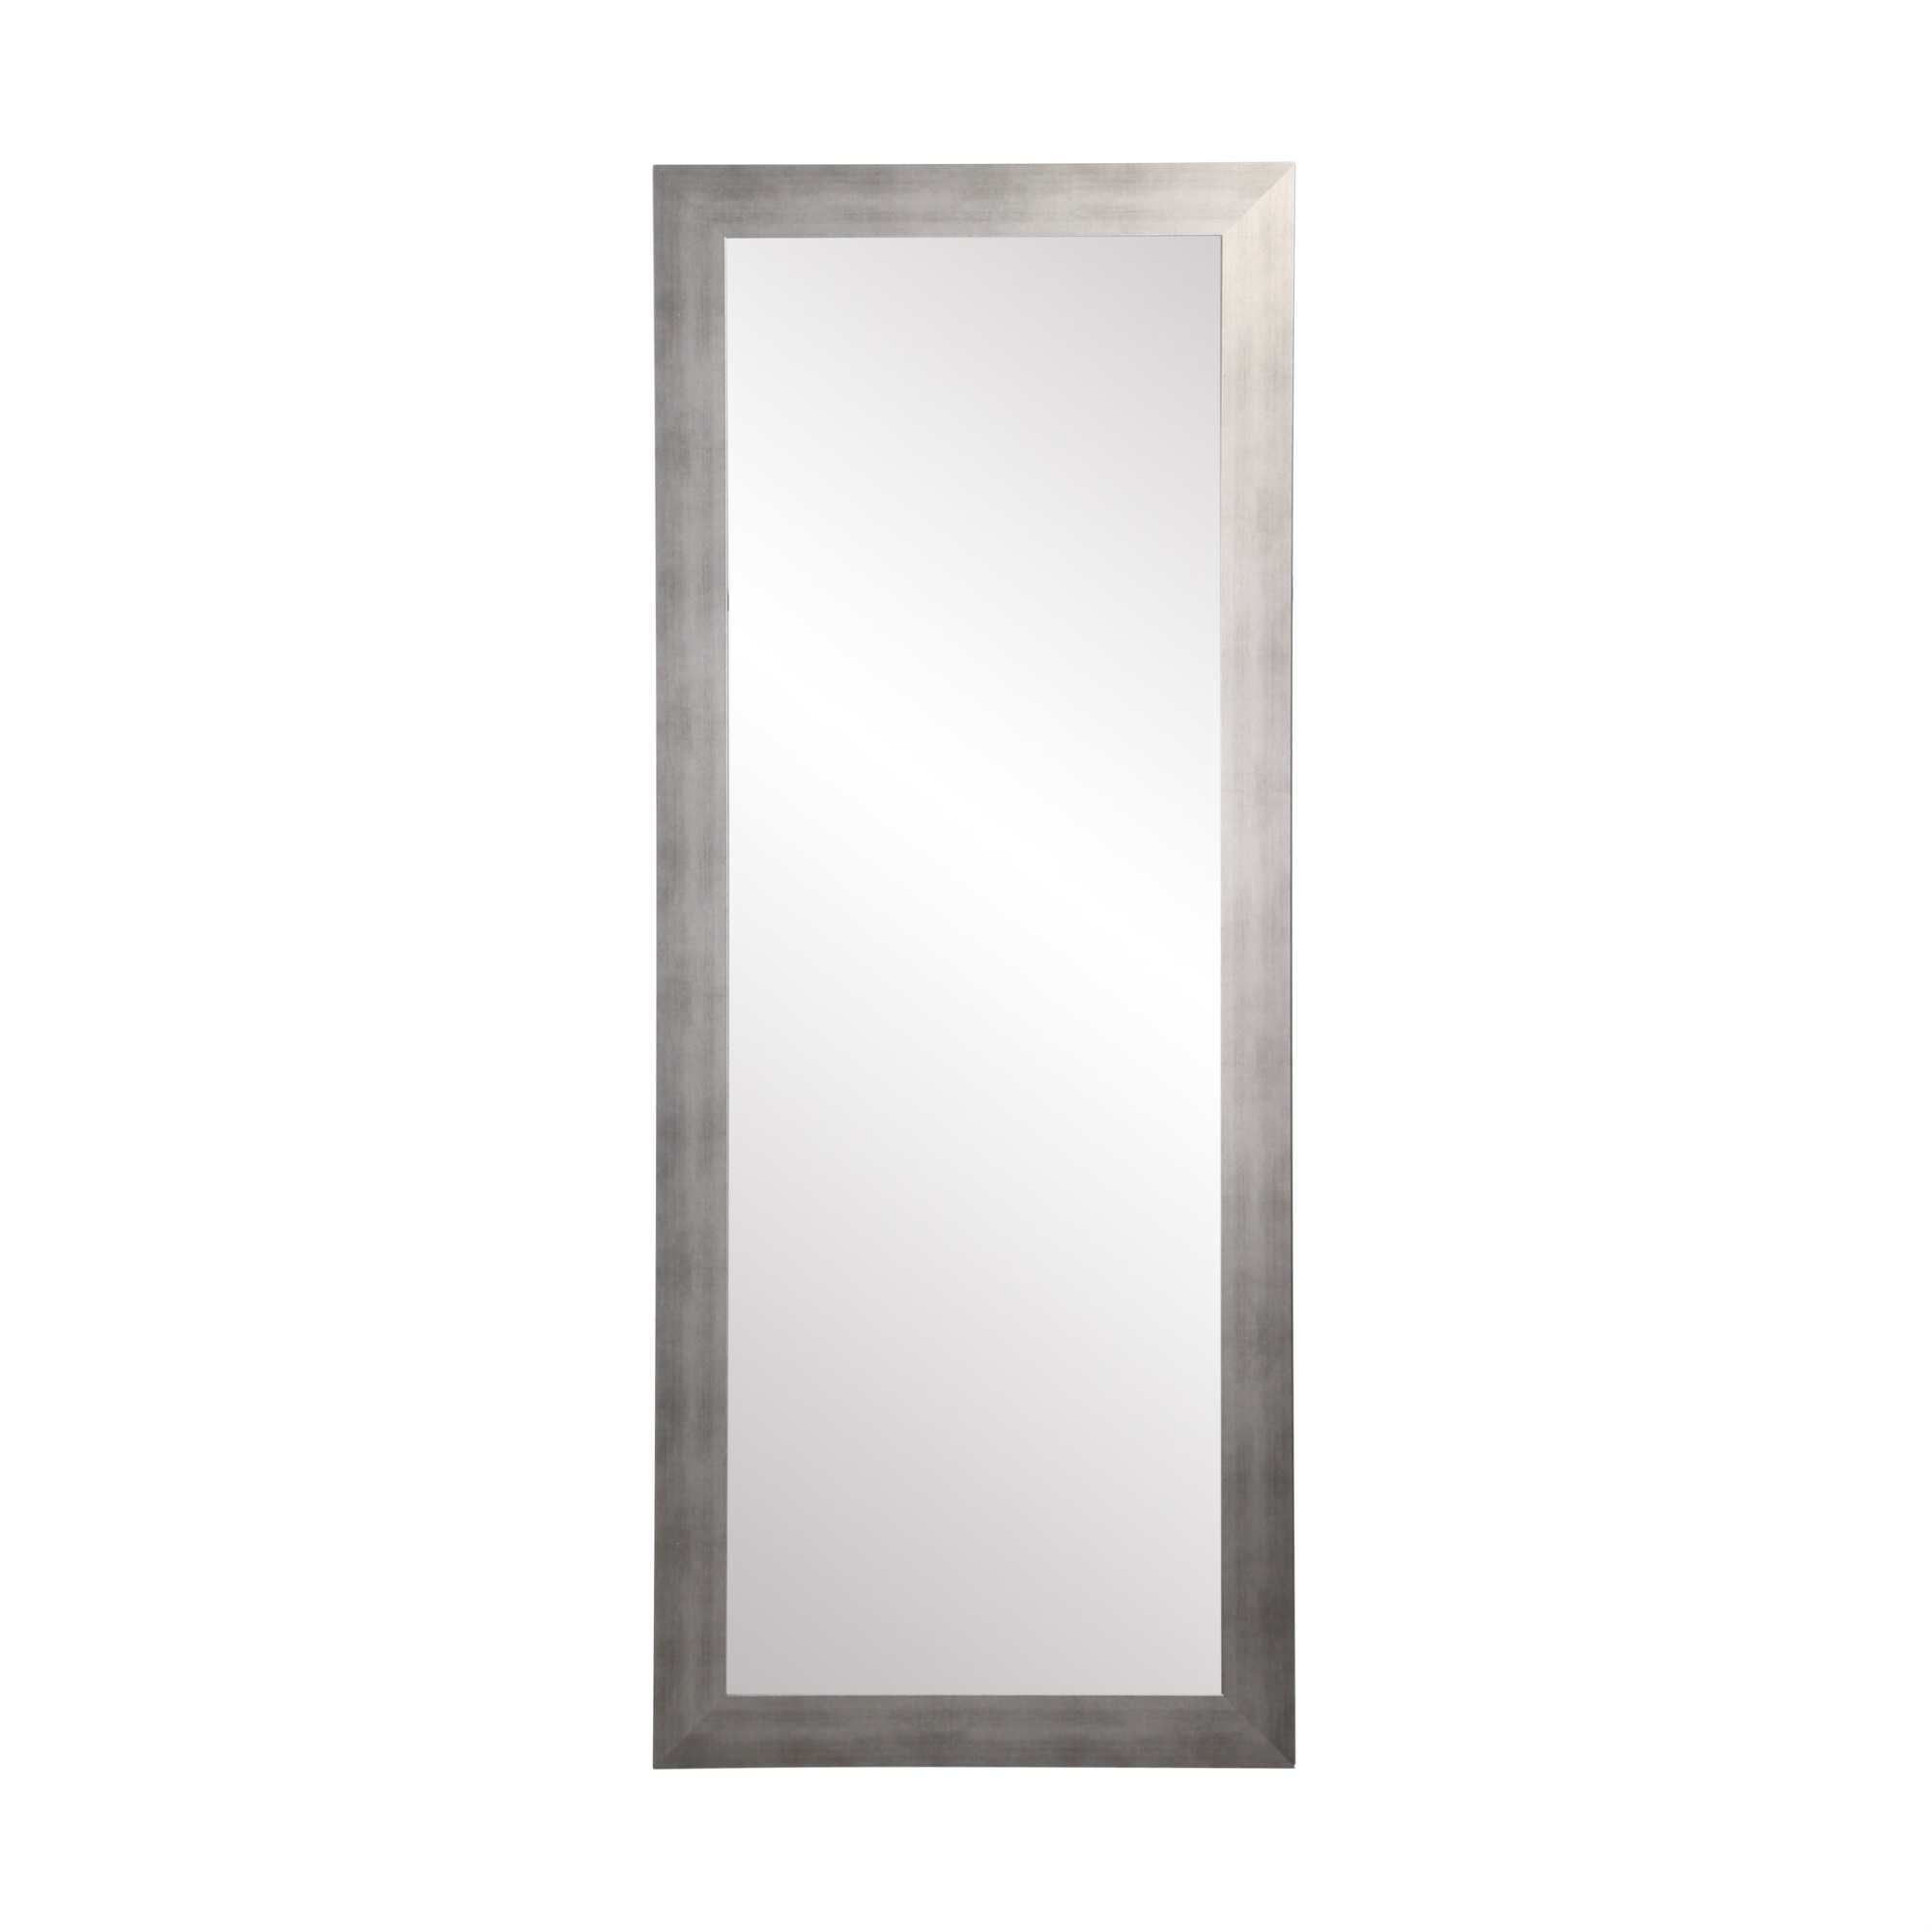 BrandtWorks Muted Cool Silver Floor Mirror